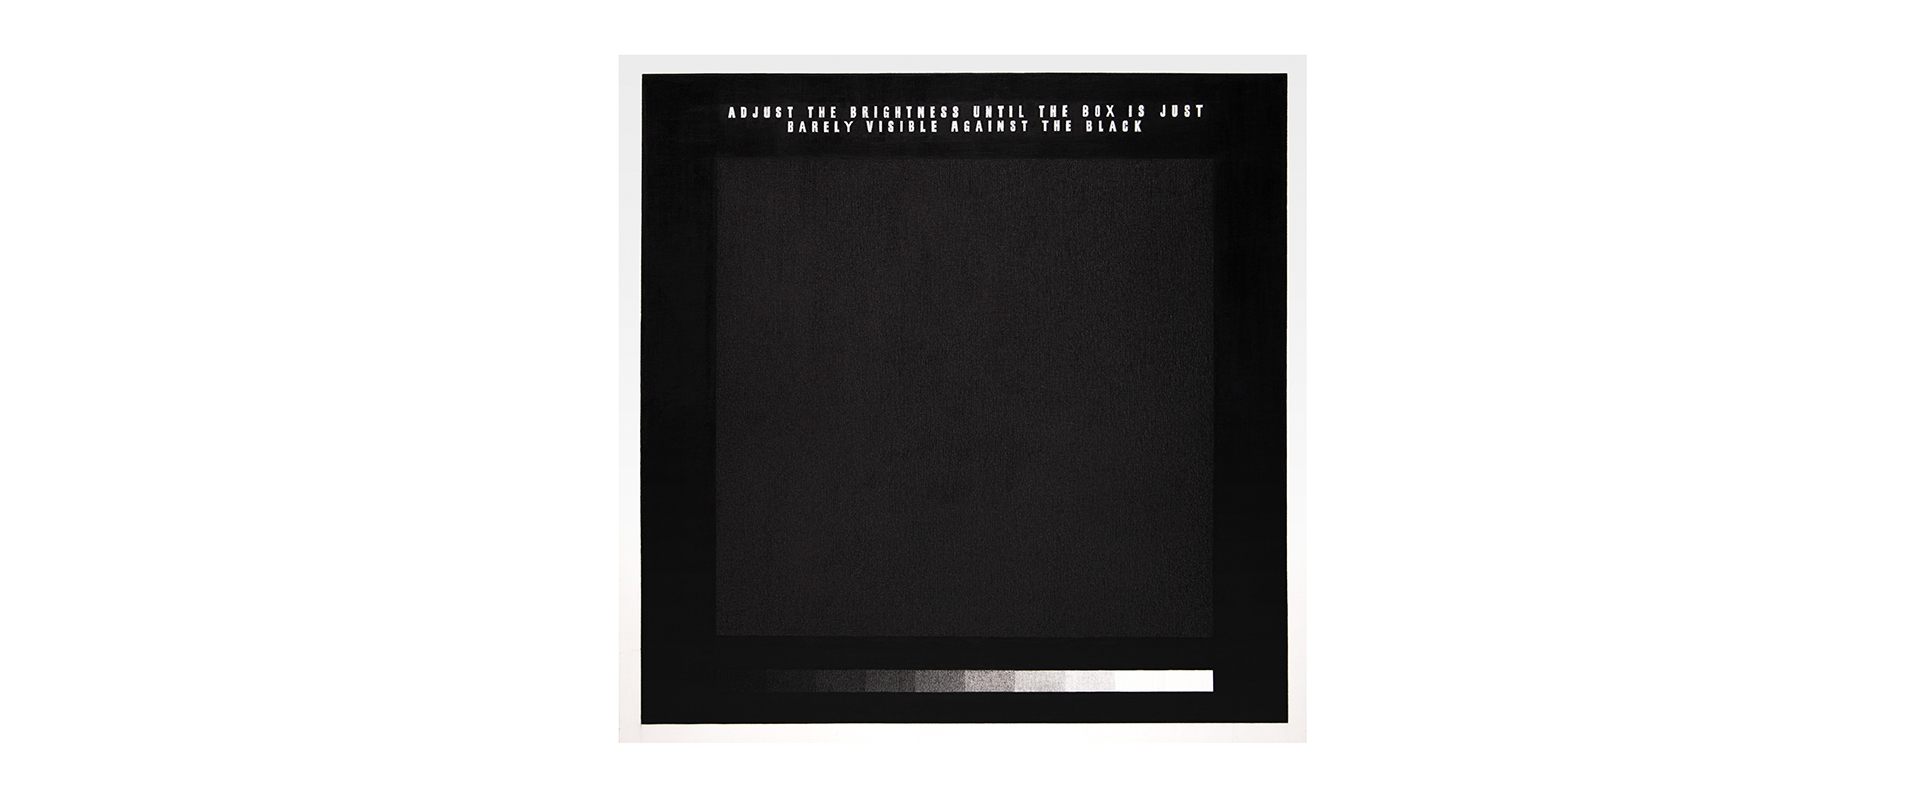 Steffen Kern, „Adjust the Brightness Until the Box Is Just Barely Visible Against the Black“ - 2021 Aquarell, Tusche und Kohlestift auf Karton, 80 x 80 cm